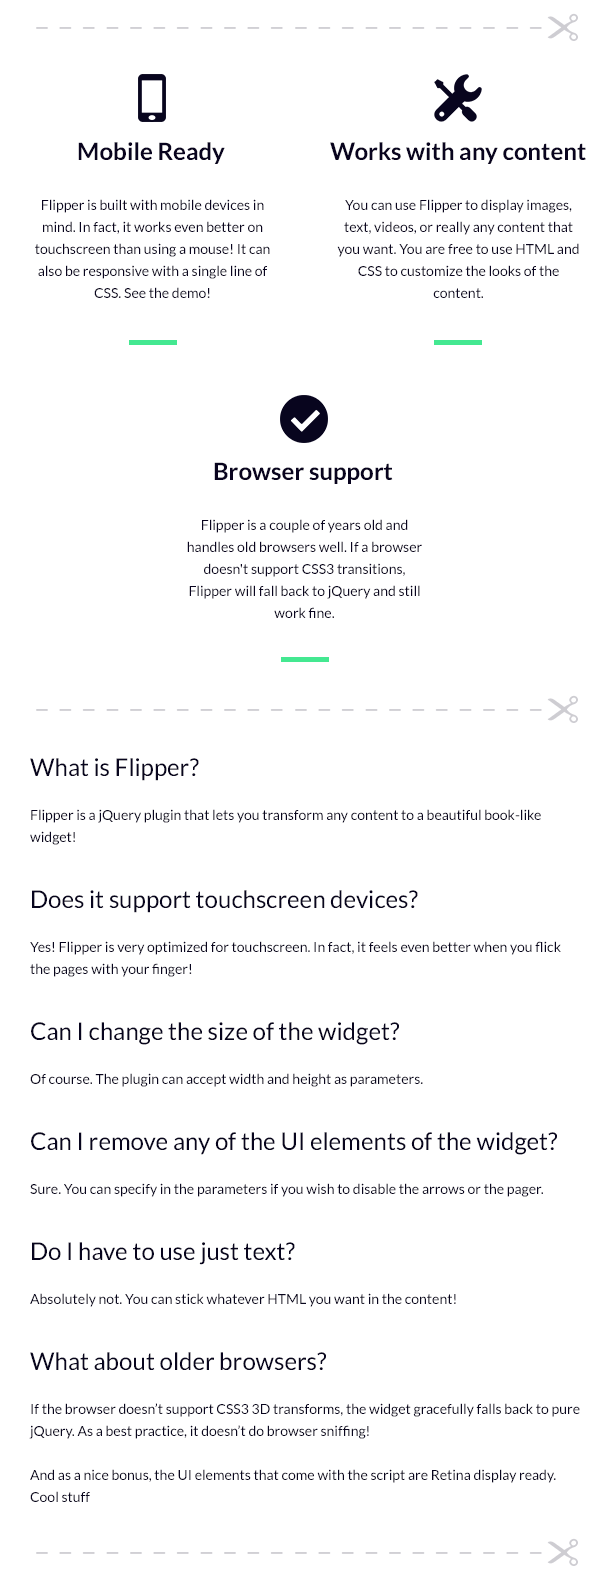 WordPress Flipper 2.0: Flipbook Style Schieber!